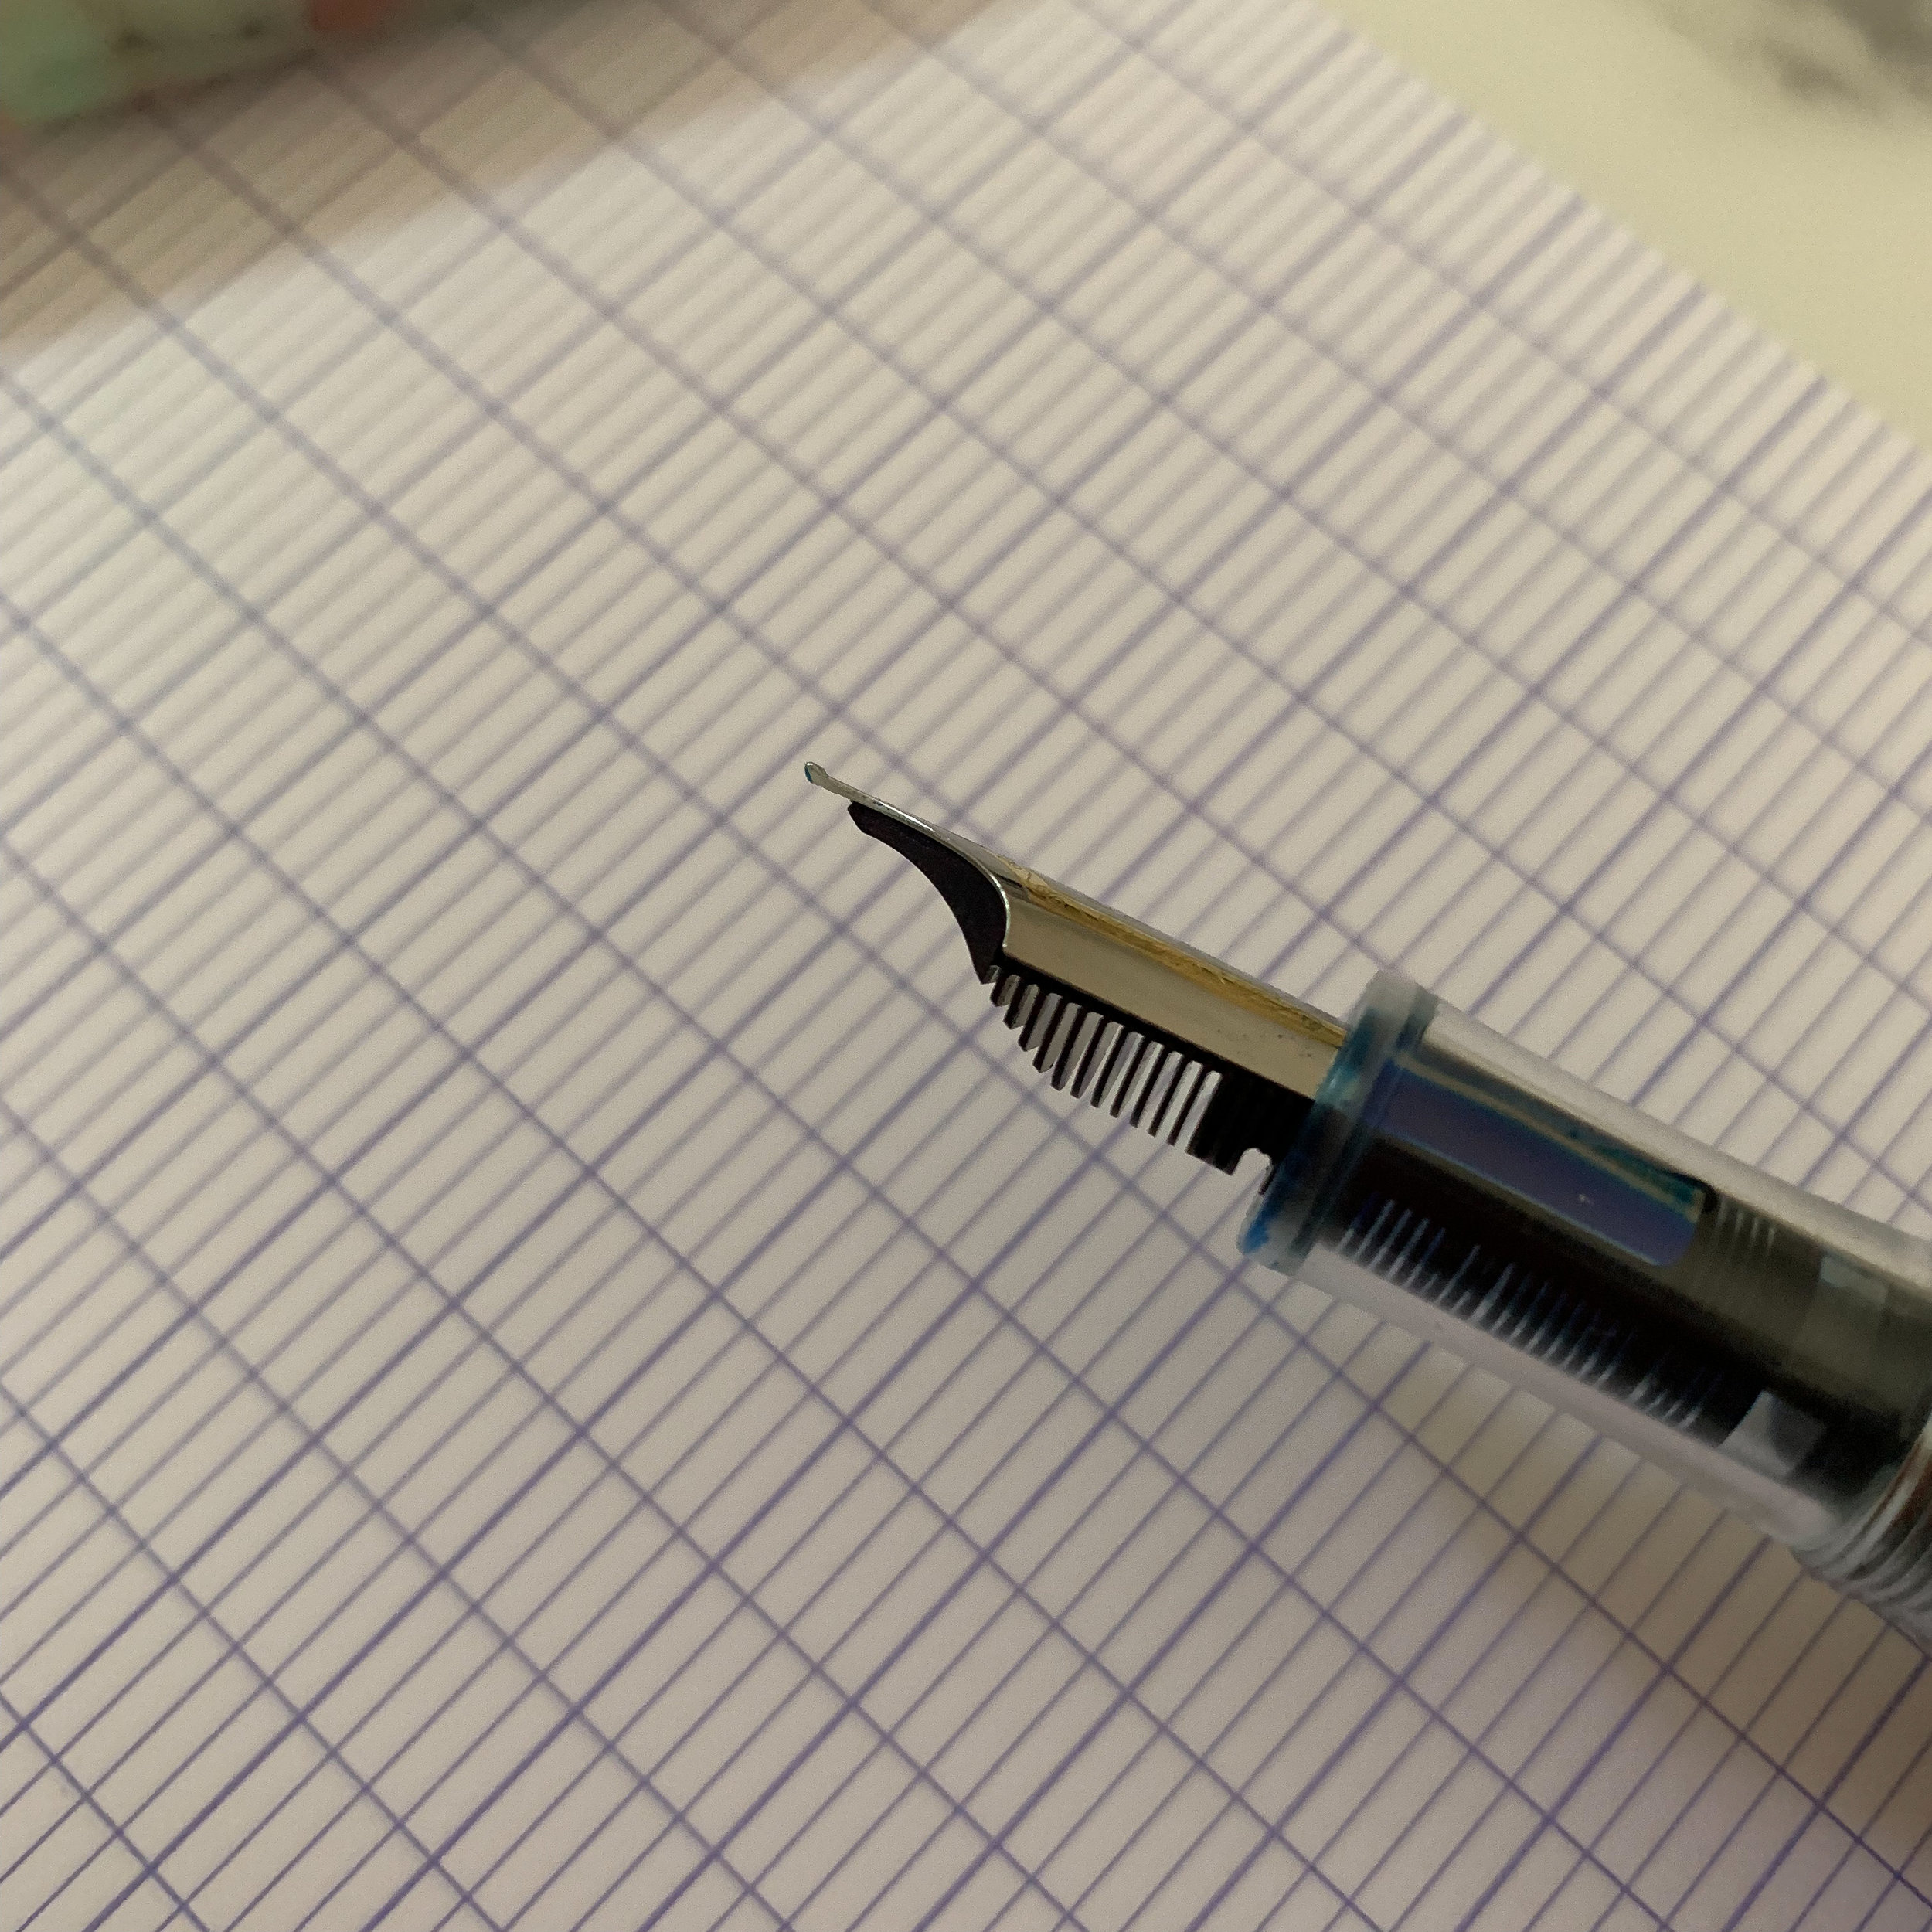 Penbbs 456 Acrylic Negative Pressure Fountain Pen Fine Nib Writing